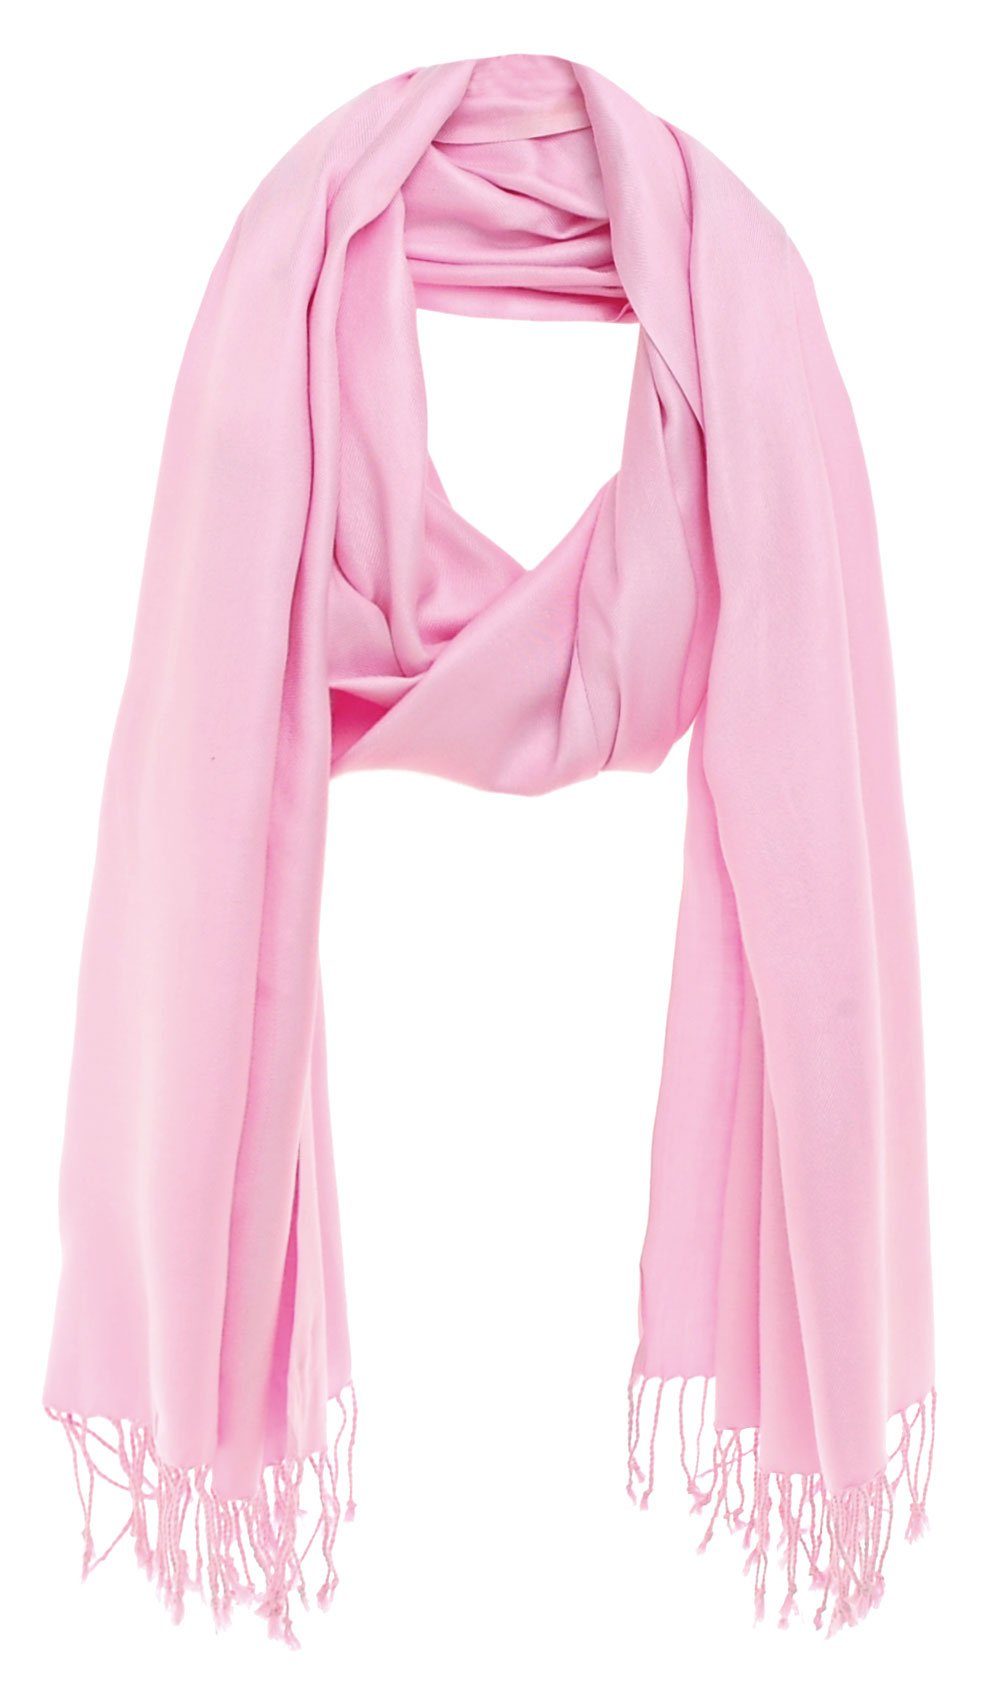 Bovari Schal Pashmina aus XL glänzend rosa 200x70 Kaschmir -, Seide cm - Viskose weich Premium Damen-Schal 100% wie - wie